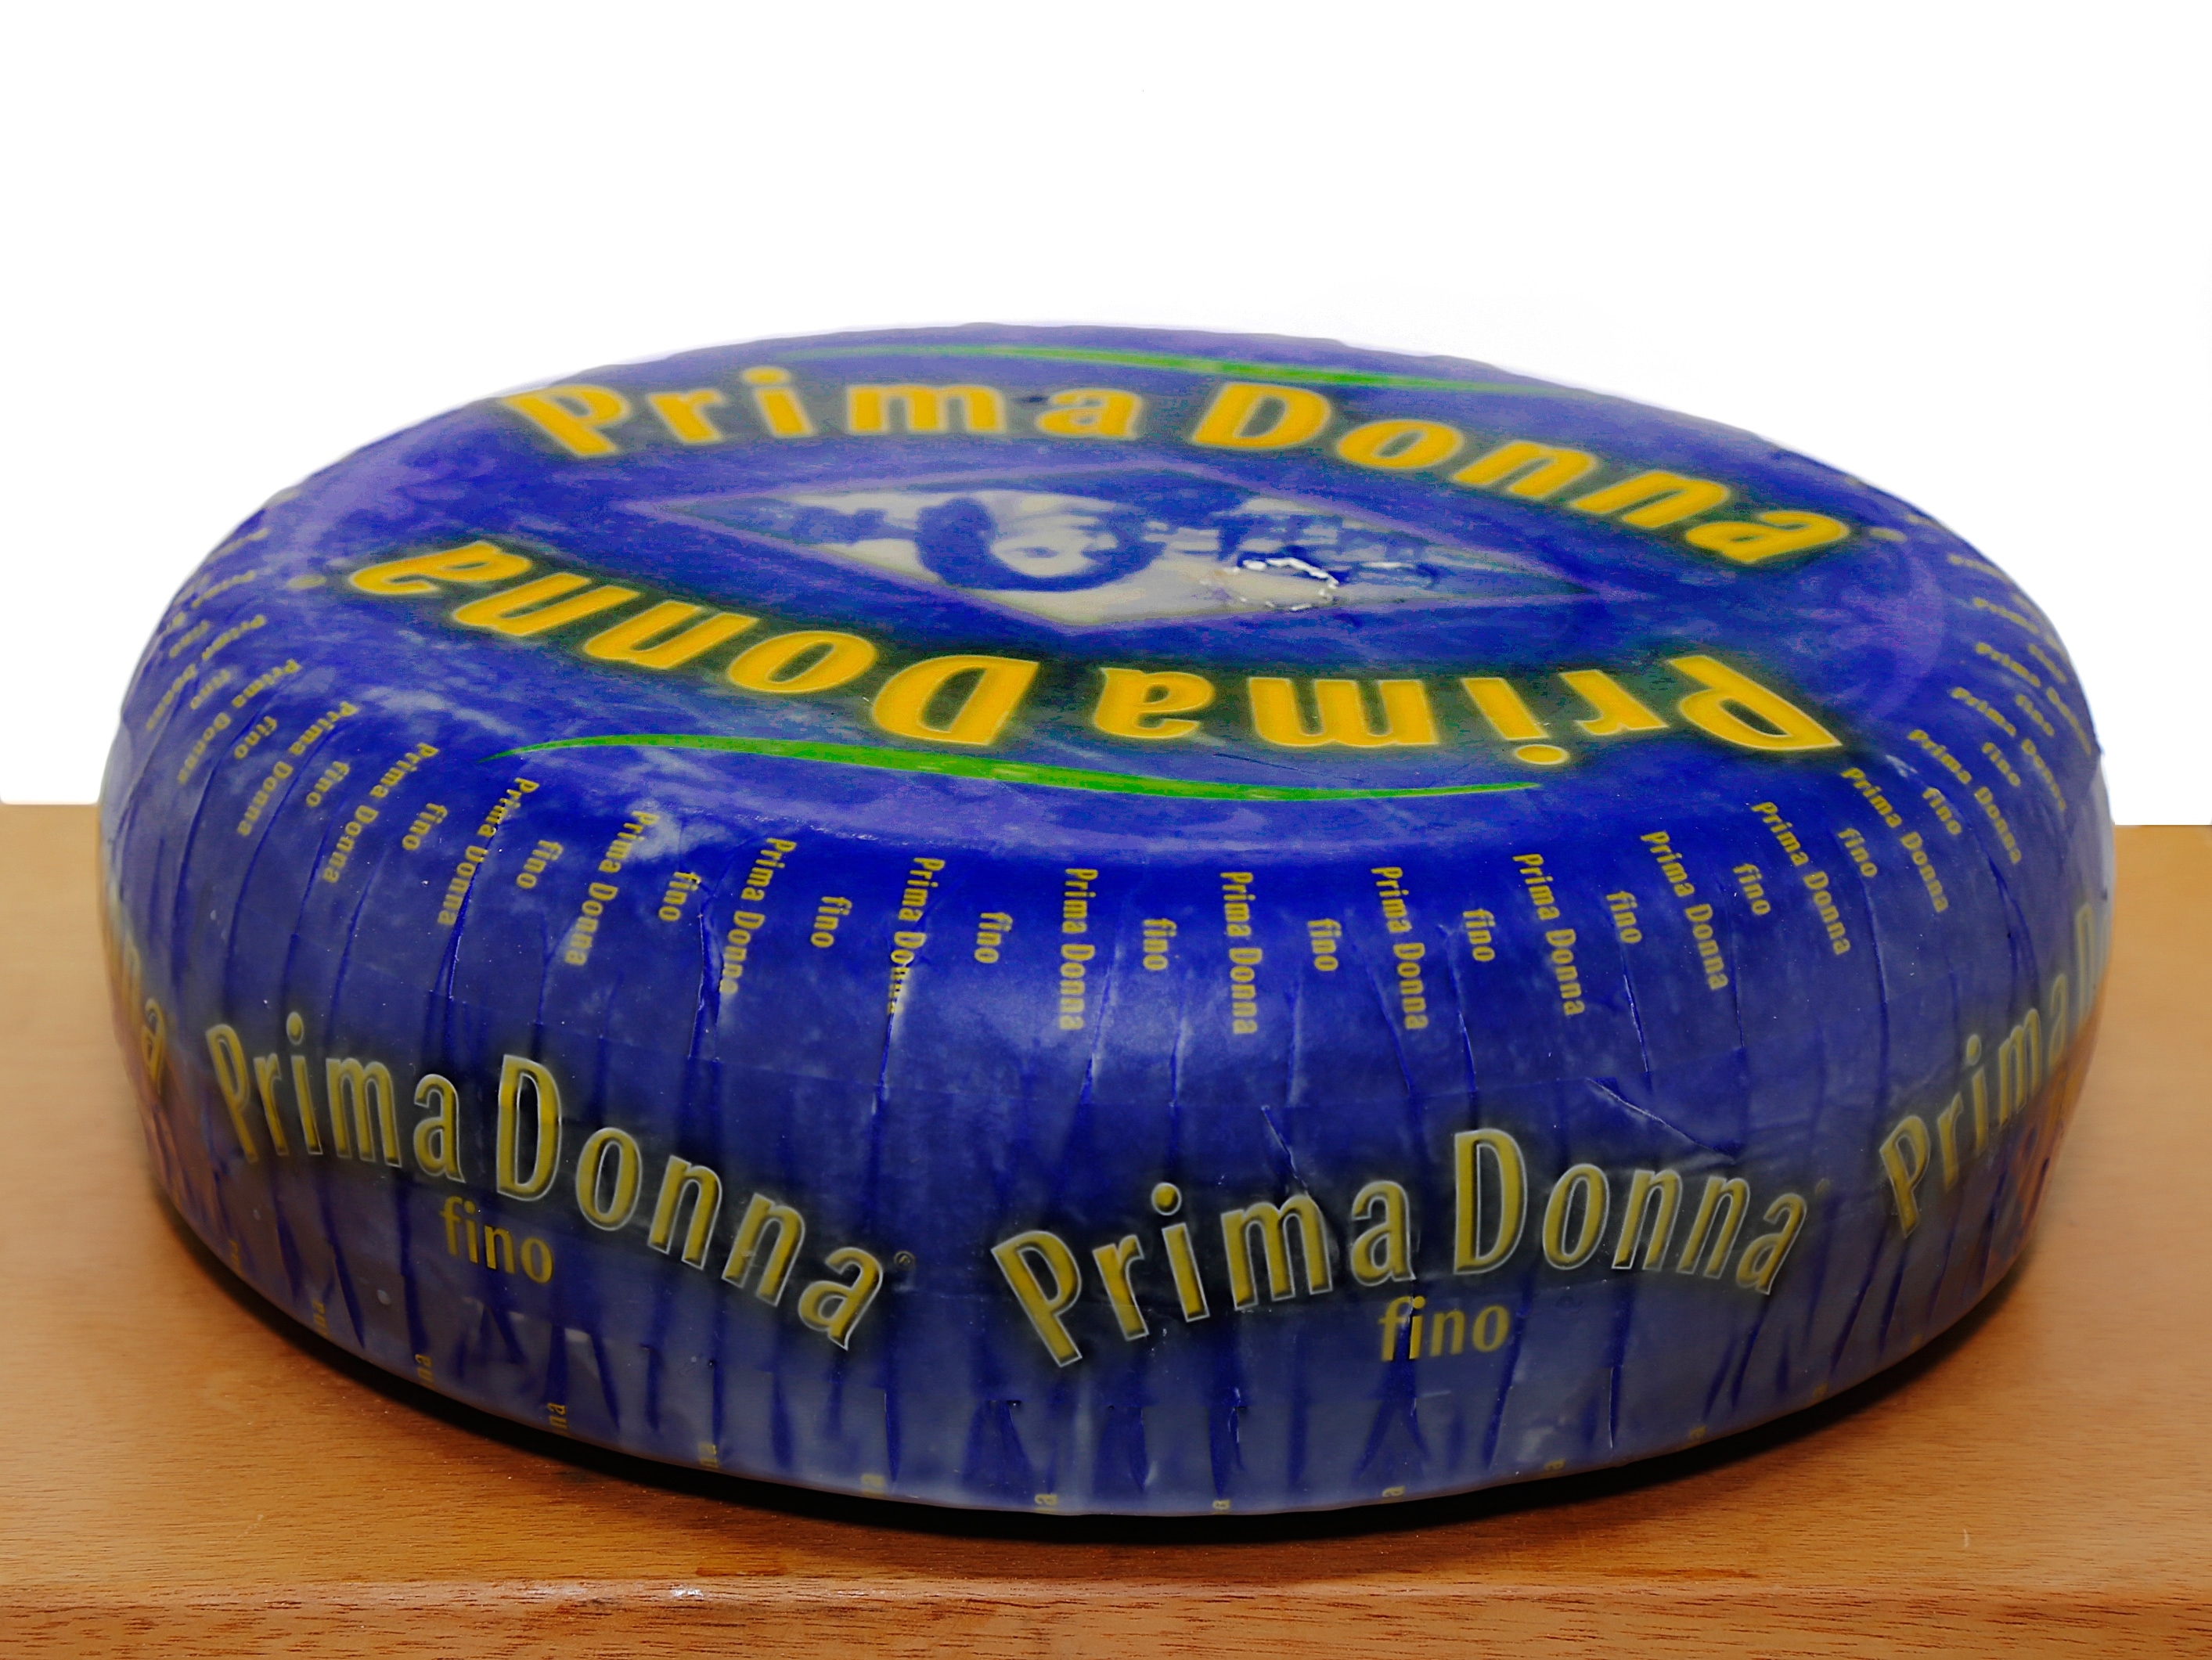 Queijo Fino Prima Donna Azul Fracionado 200g - Sam's Club